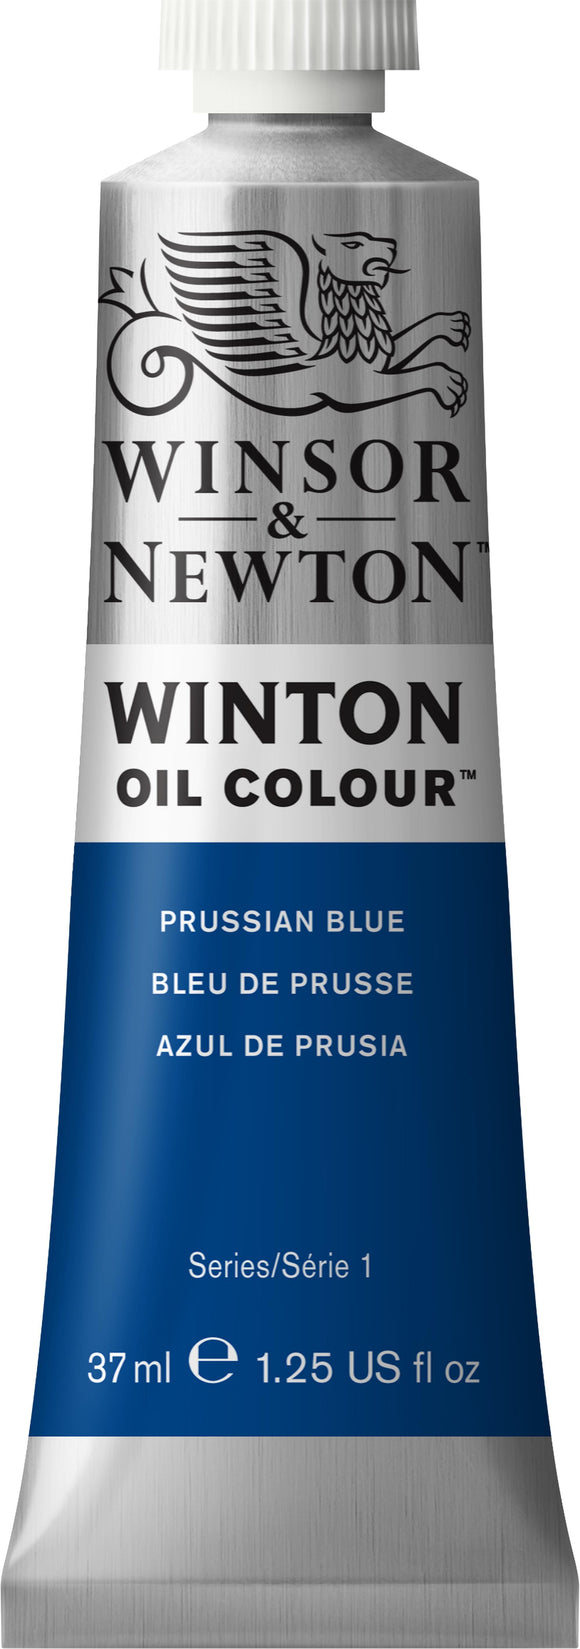 Winsor & Newton Winton Oil Colour Prussian Blue 37Ml